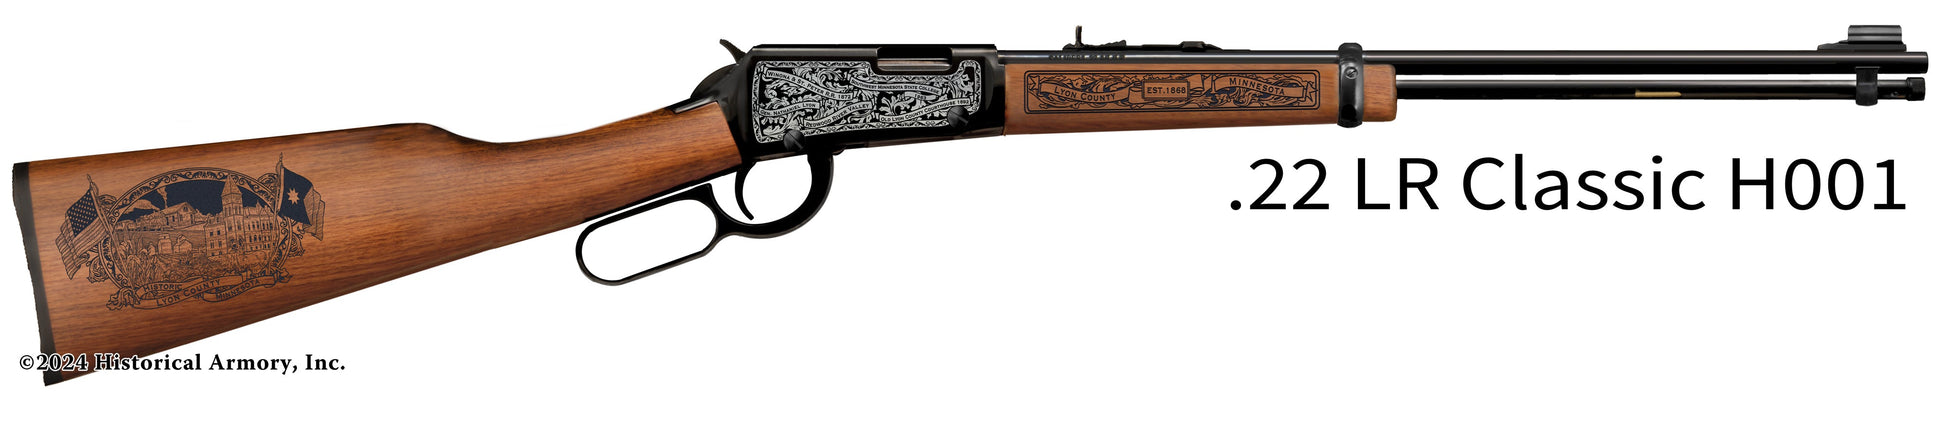 Lyon County Minnesota Engraved Henry H001 Rifle